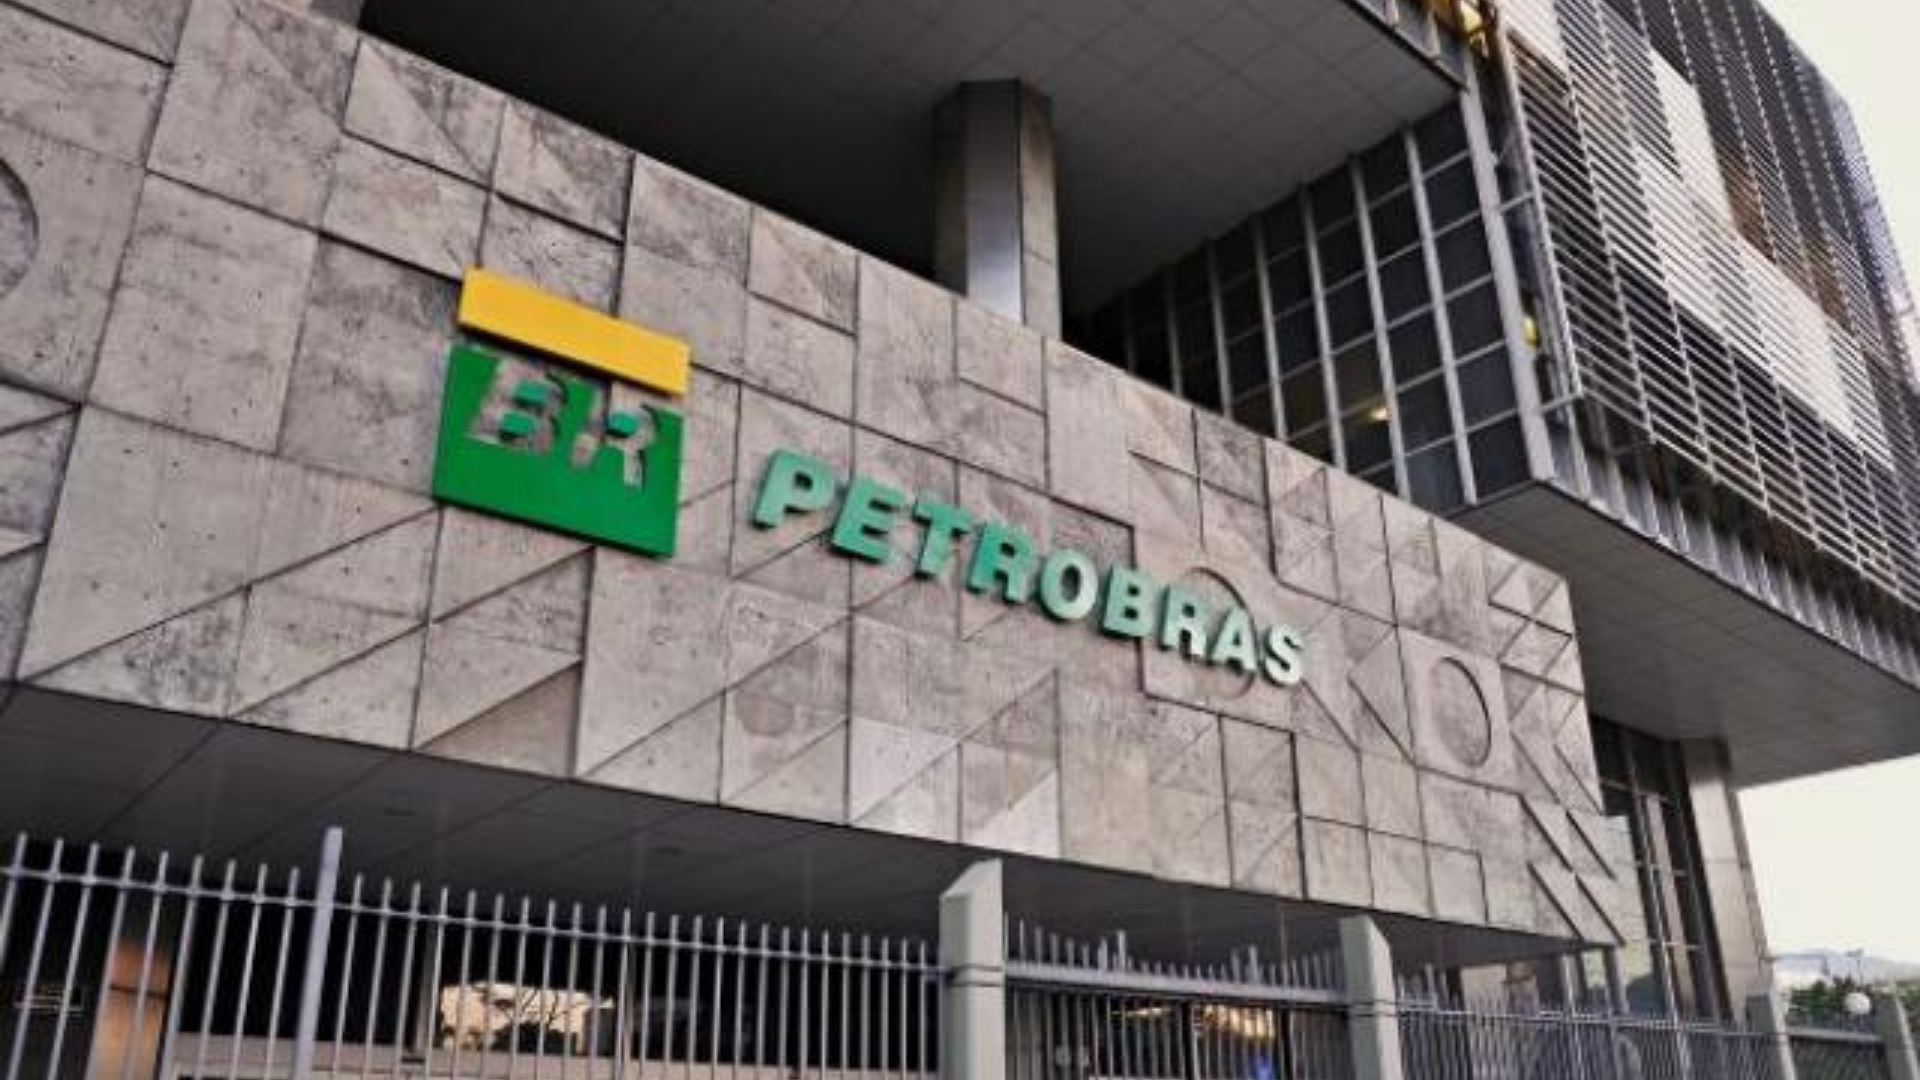 Petrobras – Camaçari – Bahia